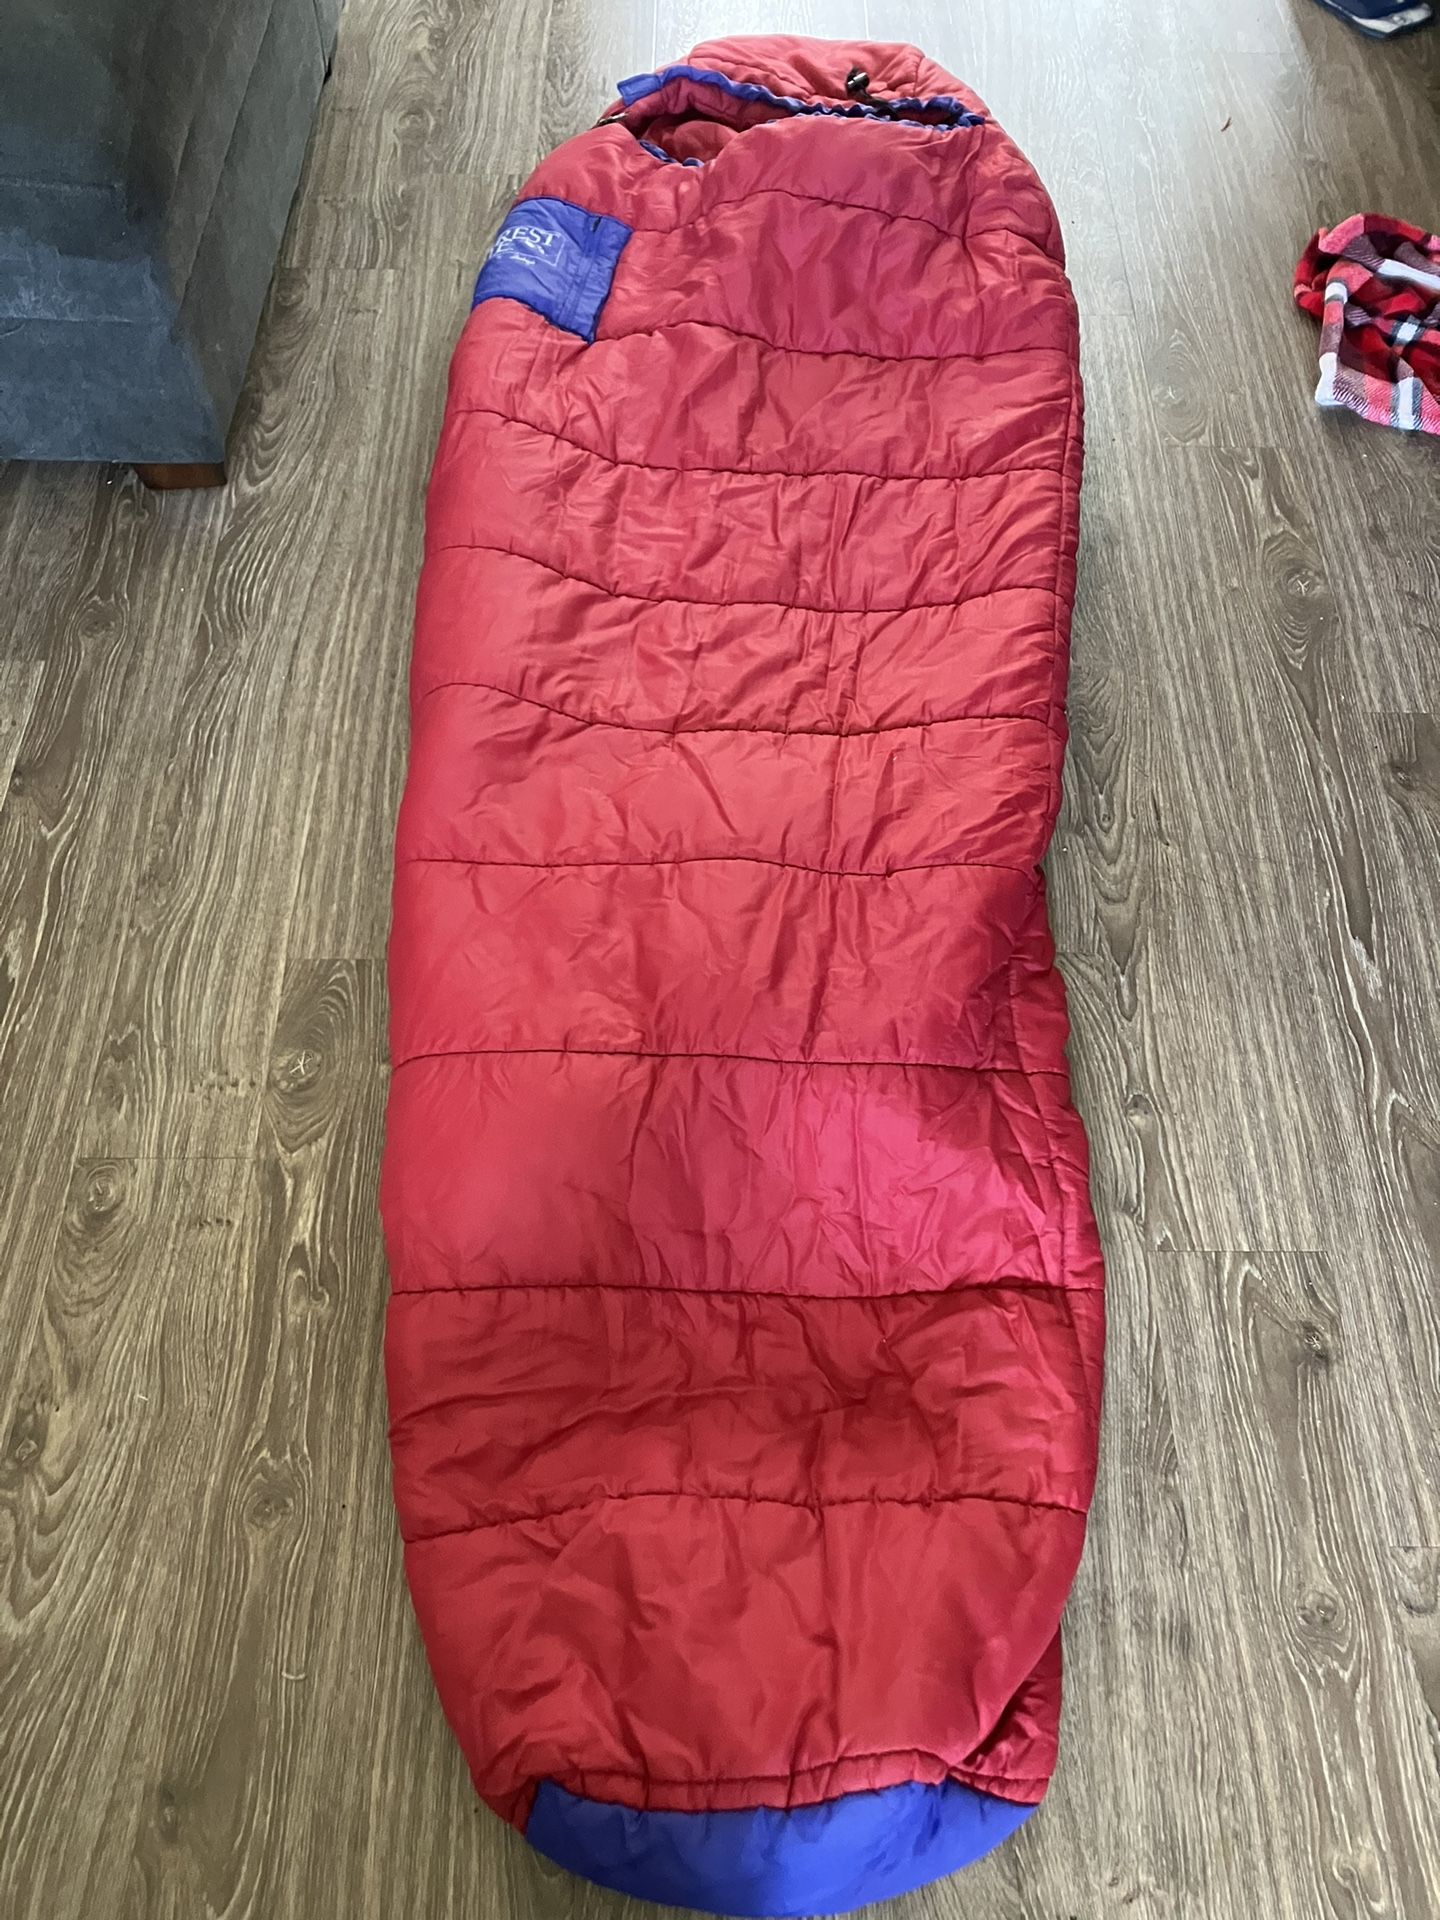 Everest Elite Slumberjack Sleeping Bag